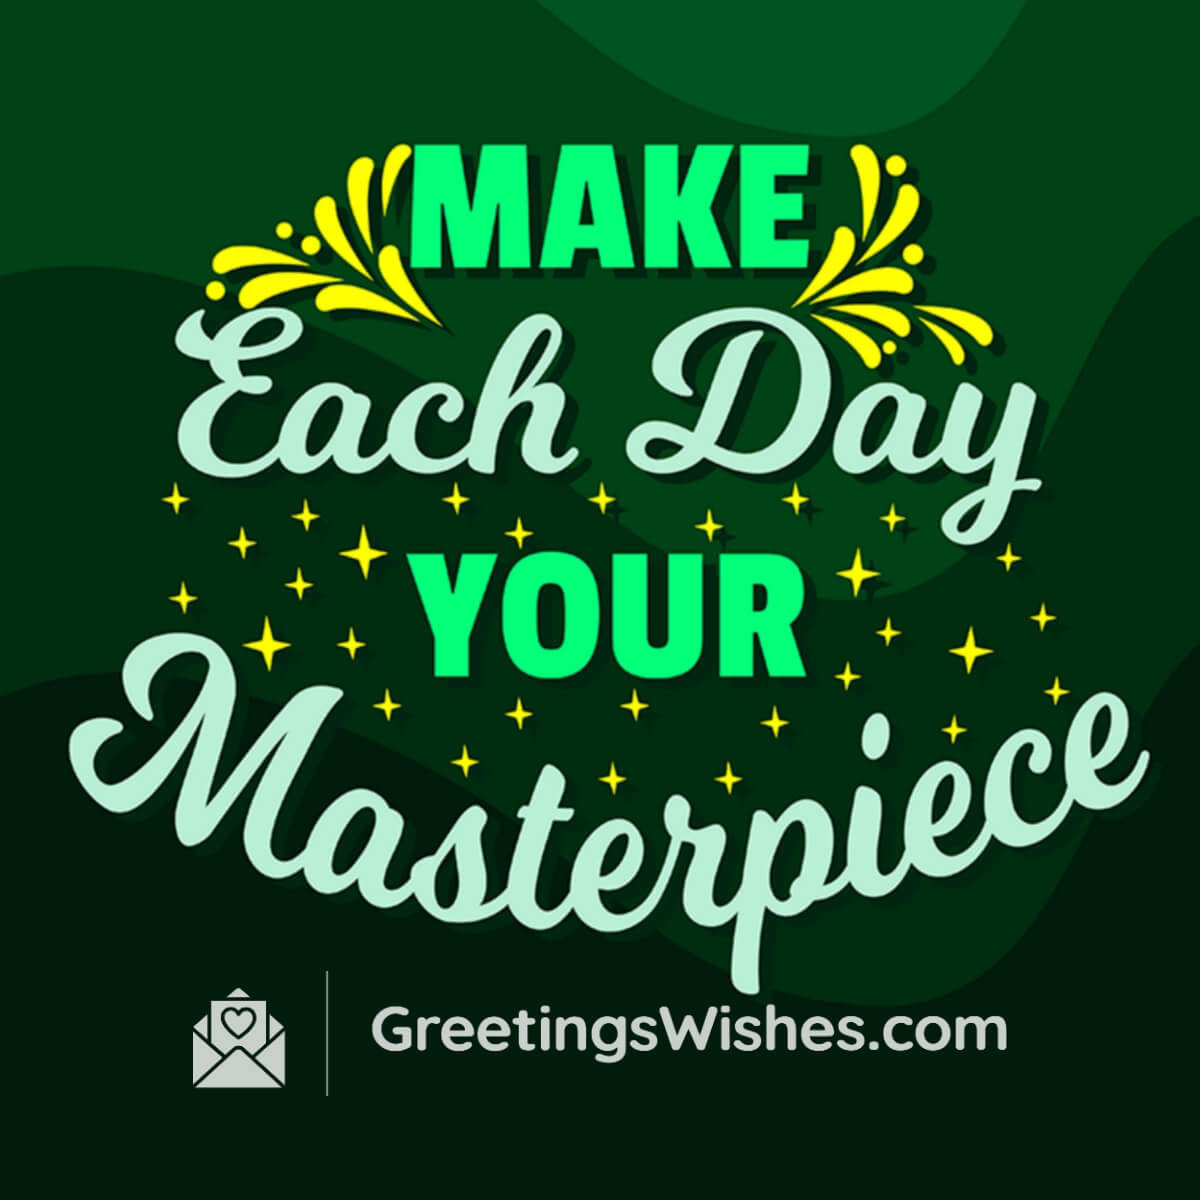 Make Each Day Your Masterрiece